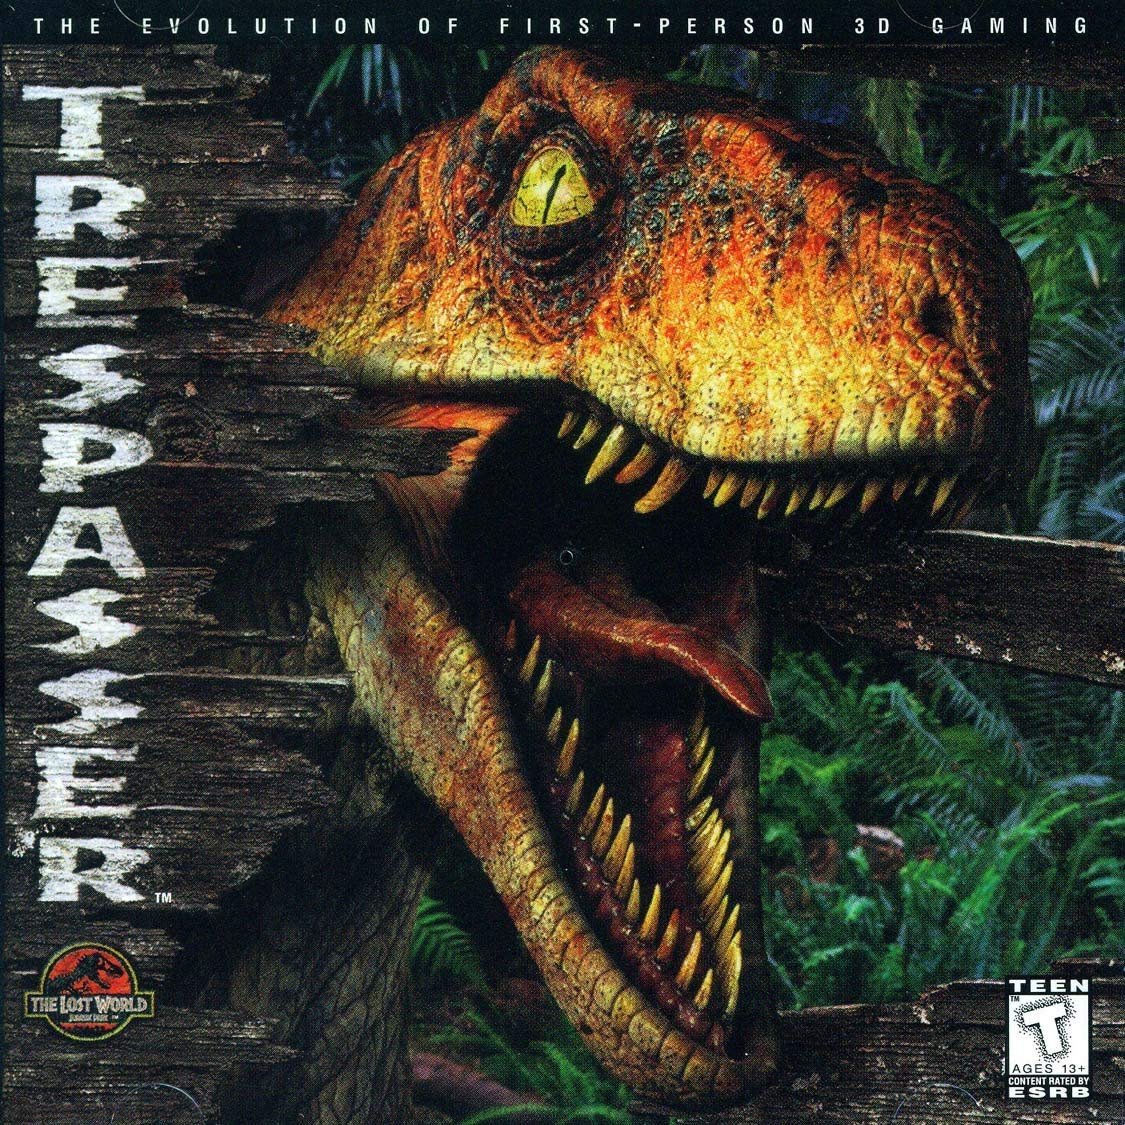 Trespasser: The Lost World - Jurassic Park cover